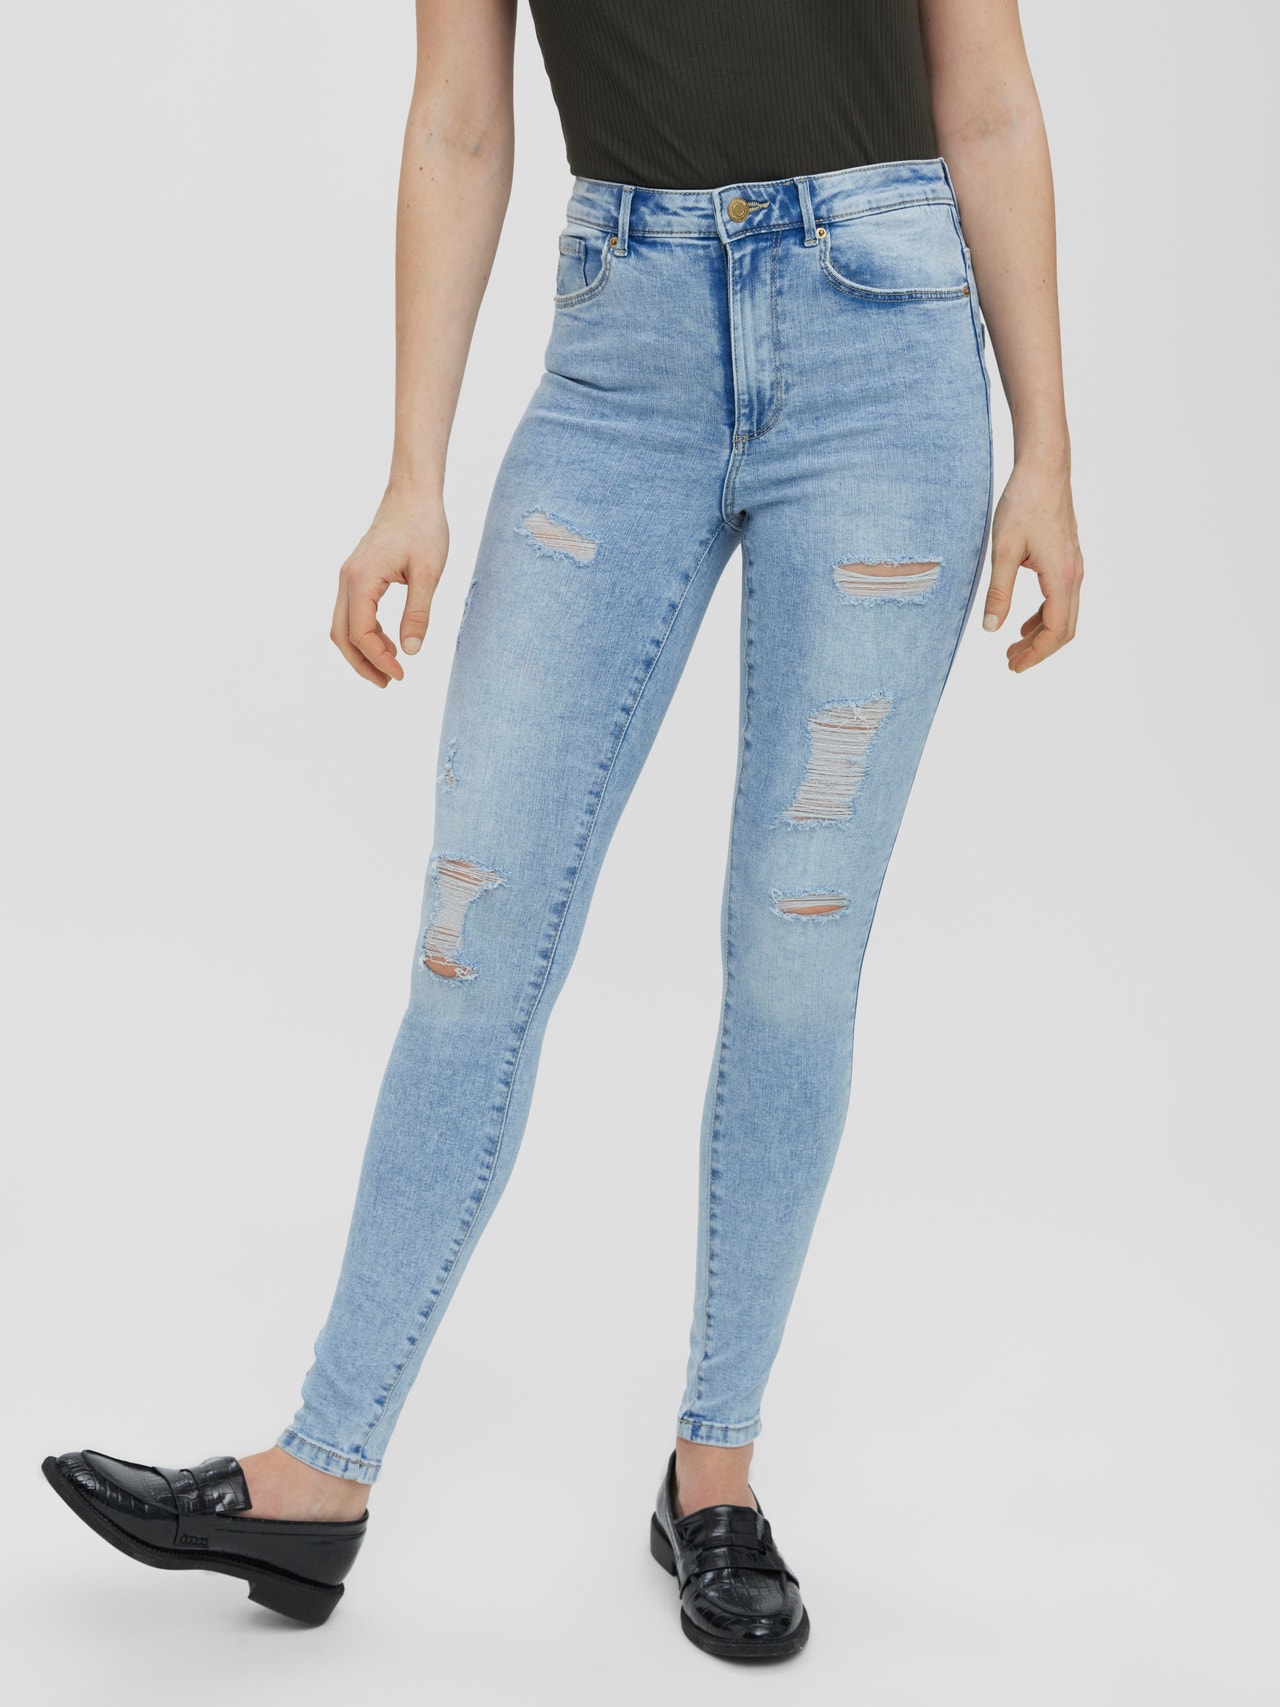 Moda® rise 50% | Jeans High VMSOPHIA discount! Vero with